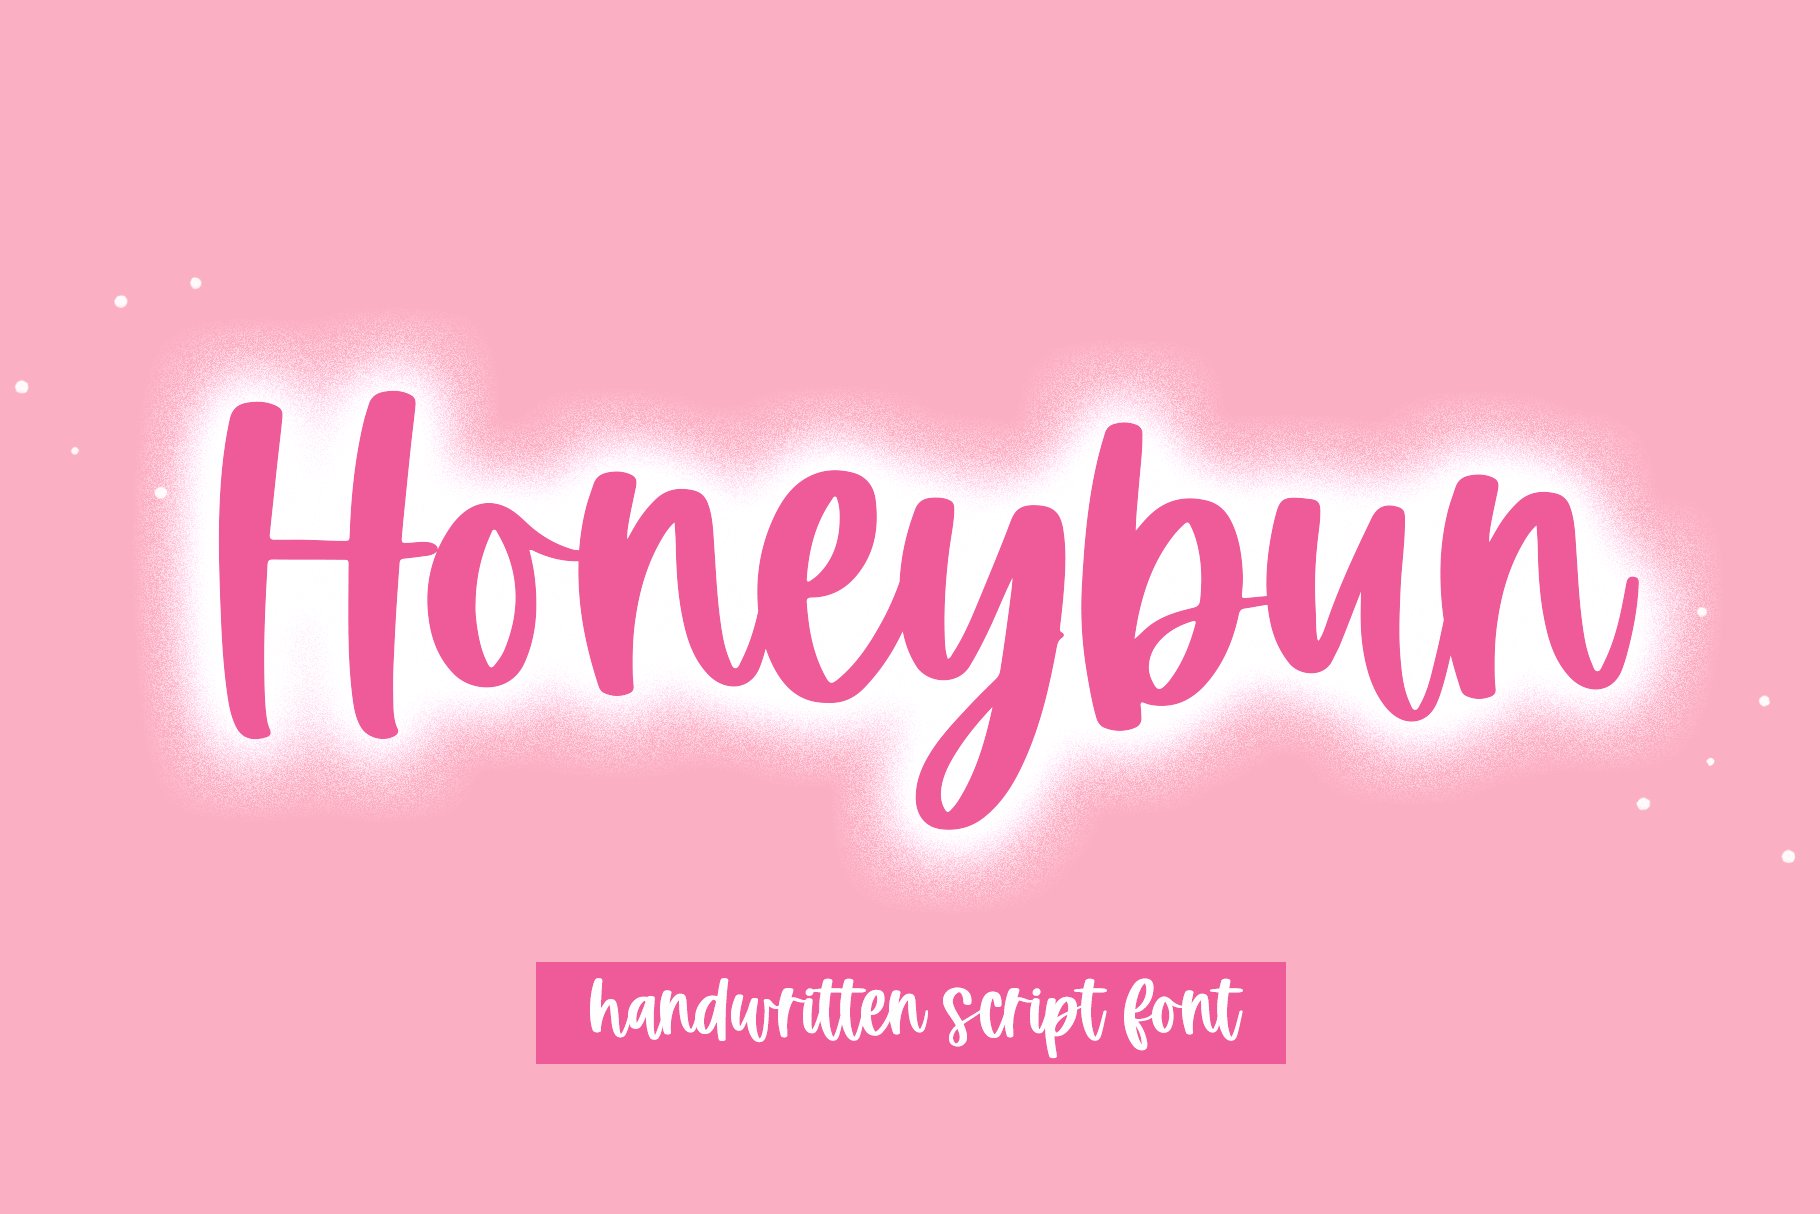 Honeybun | Handwritten Script Font cover image.